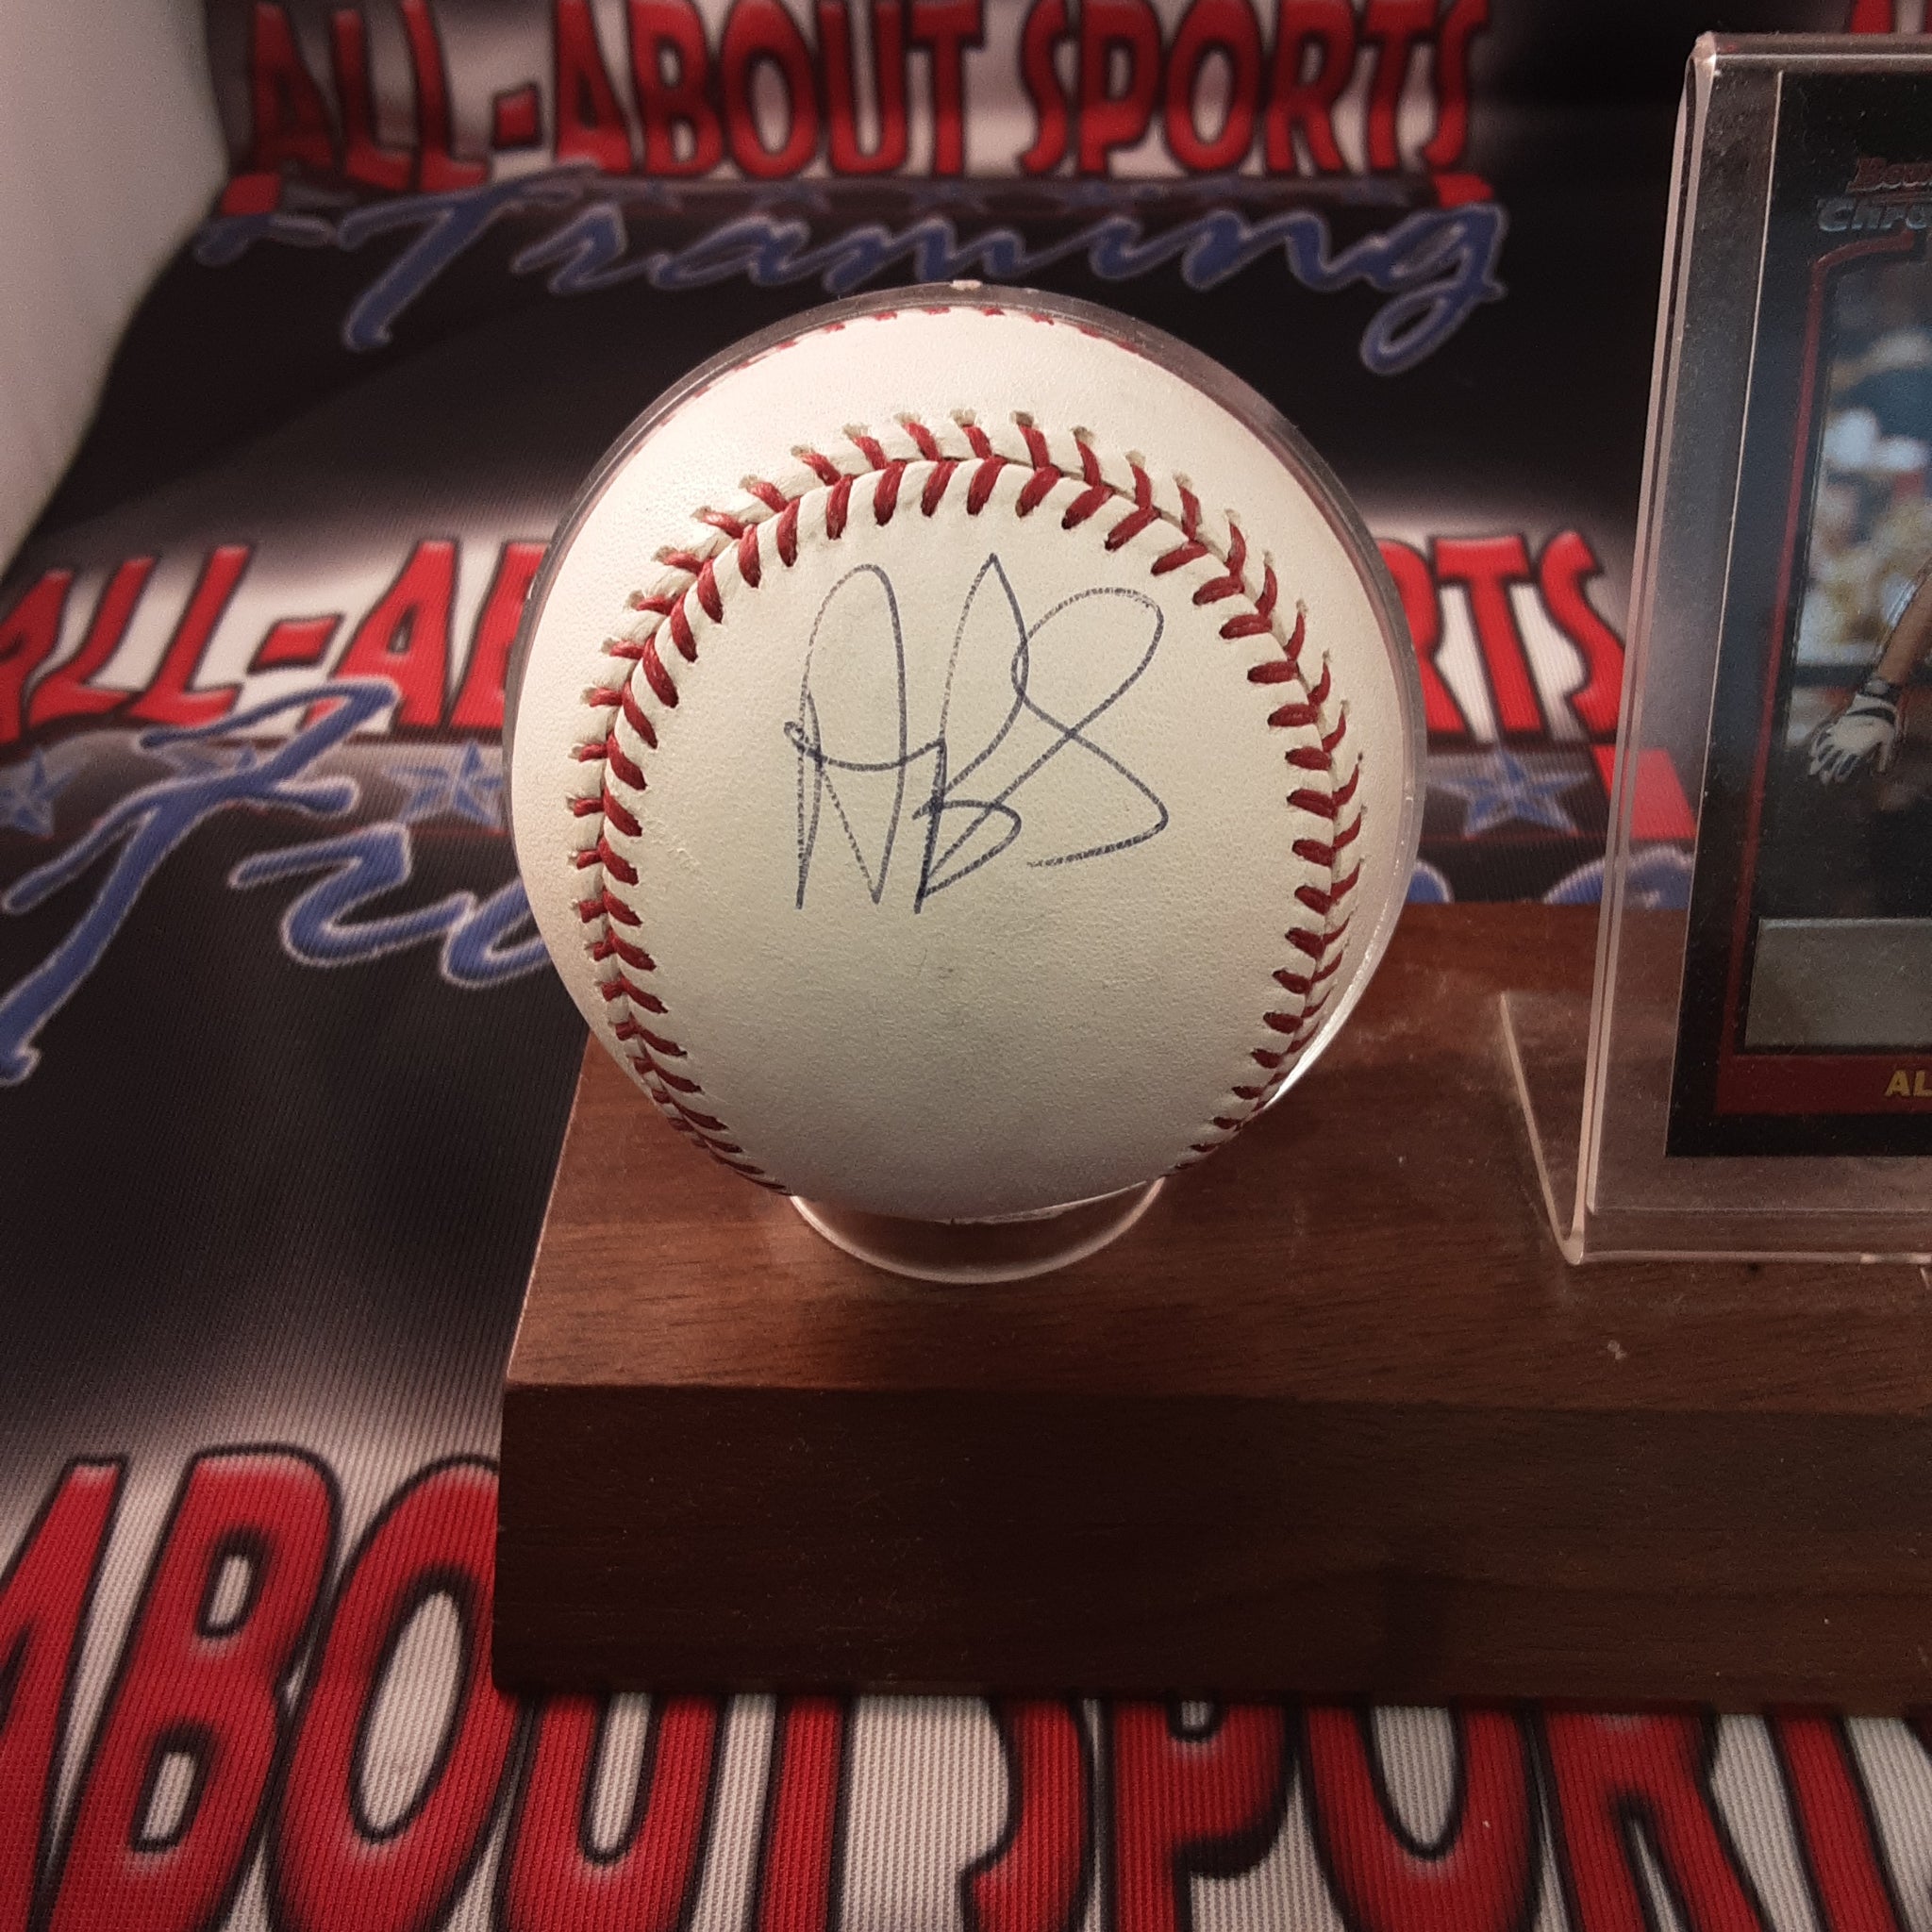 Albert Pujols Authentic Signed Baseball Autographed JSA Letter.